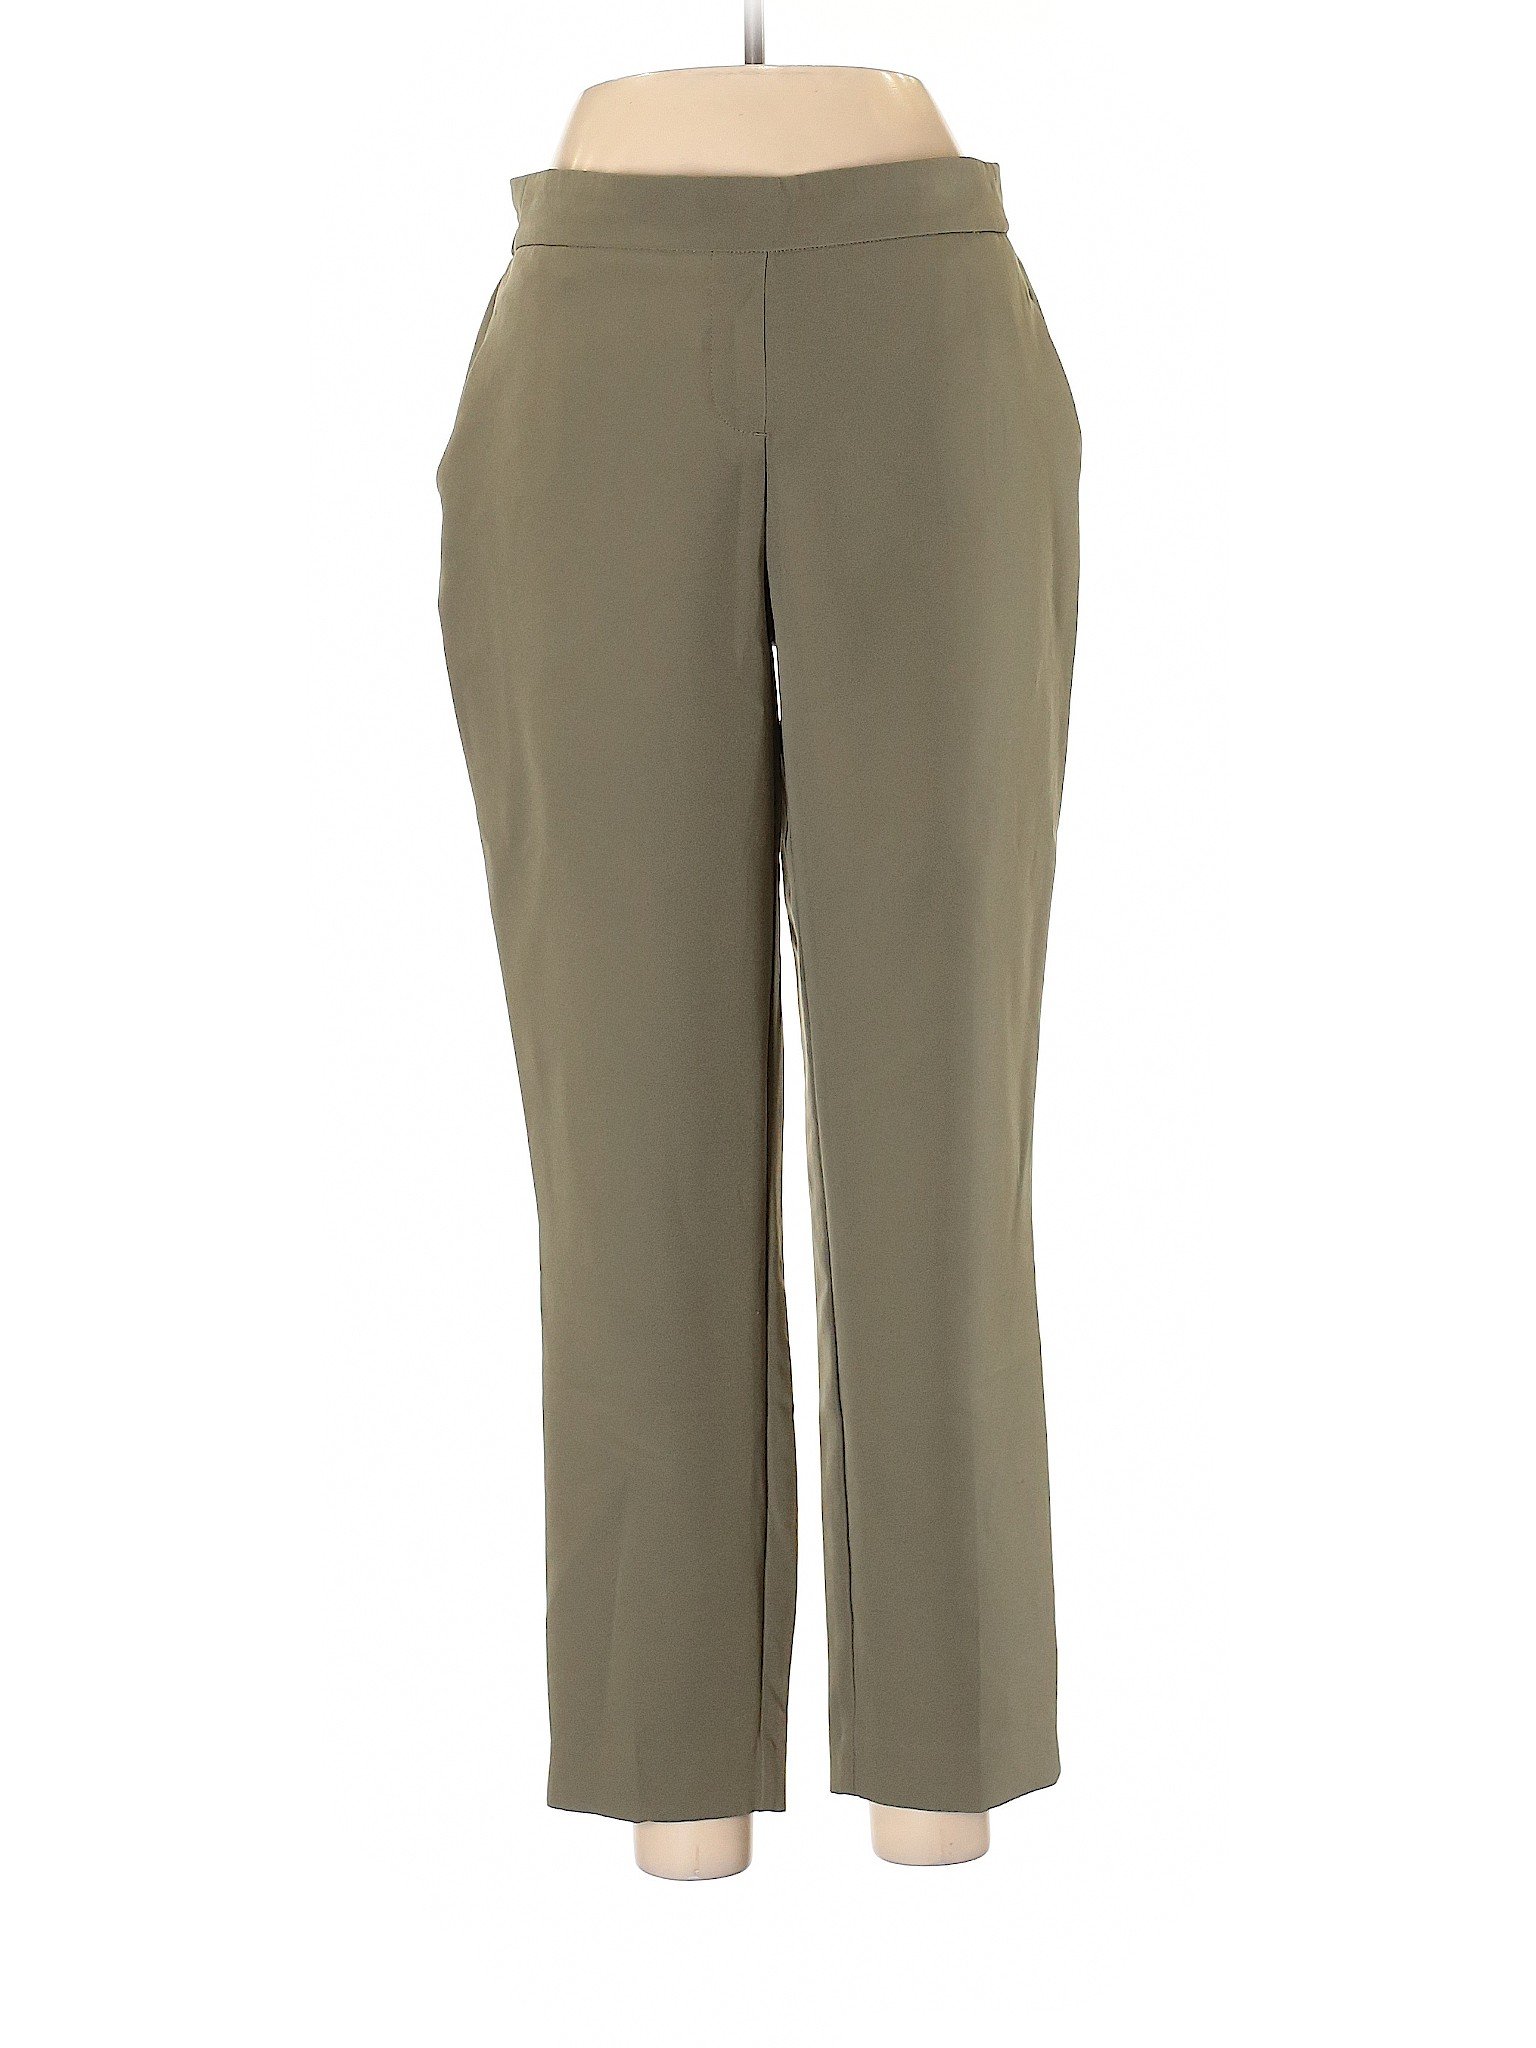 Eliane Rose Women Green Dress Pants 8 | eBay